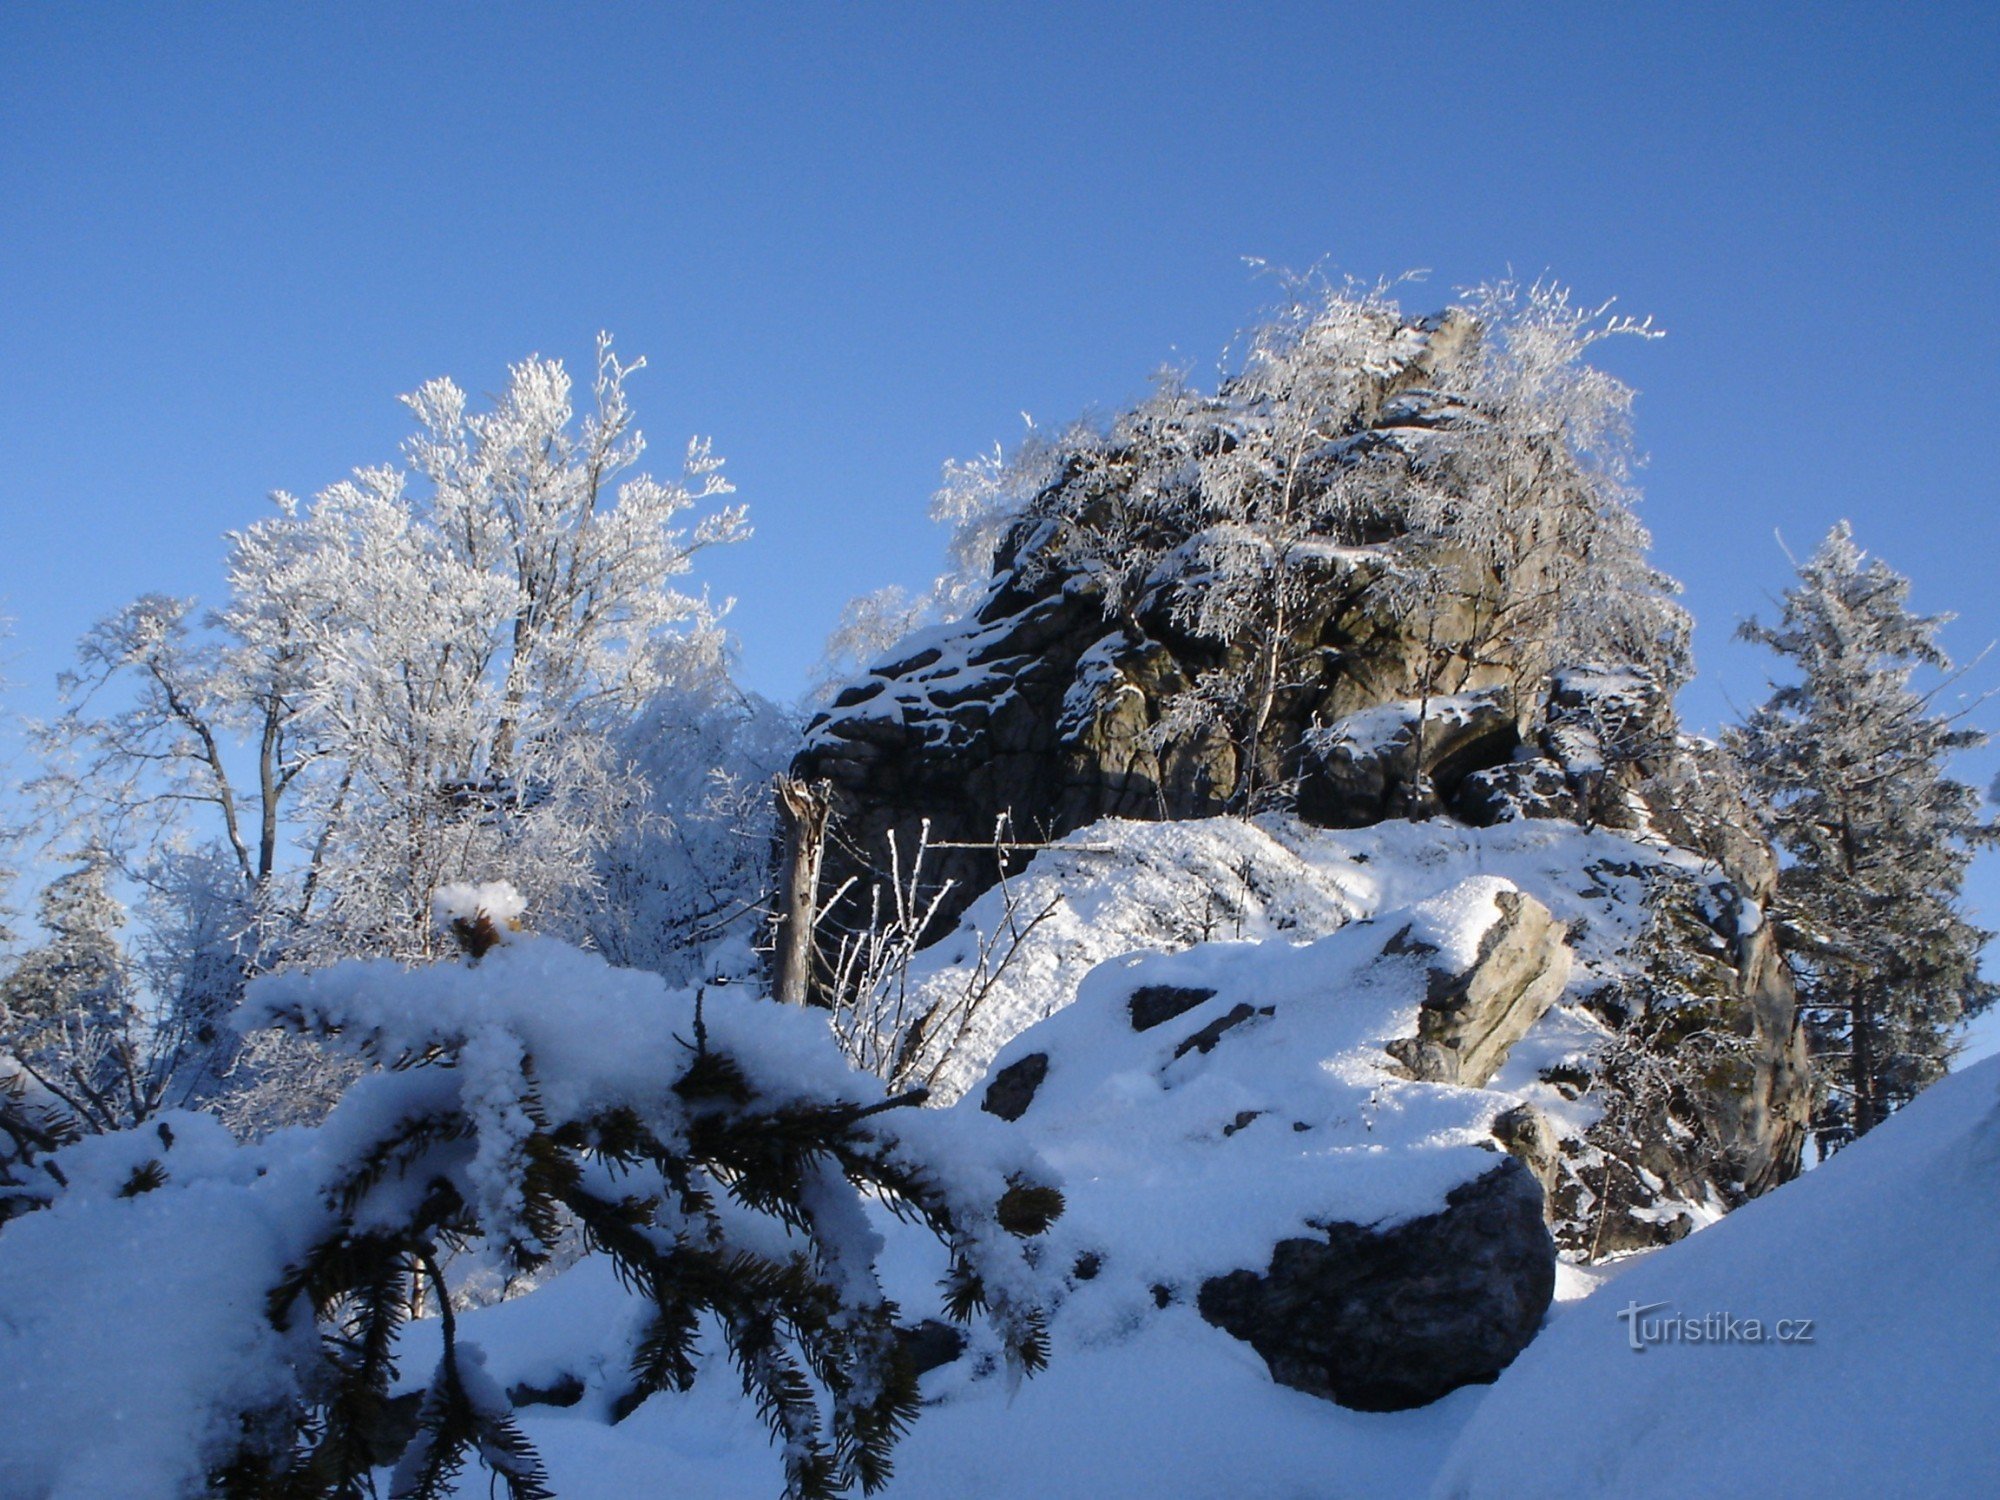 Malinska rock in winter